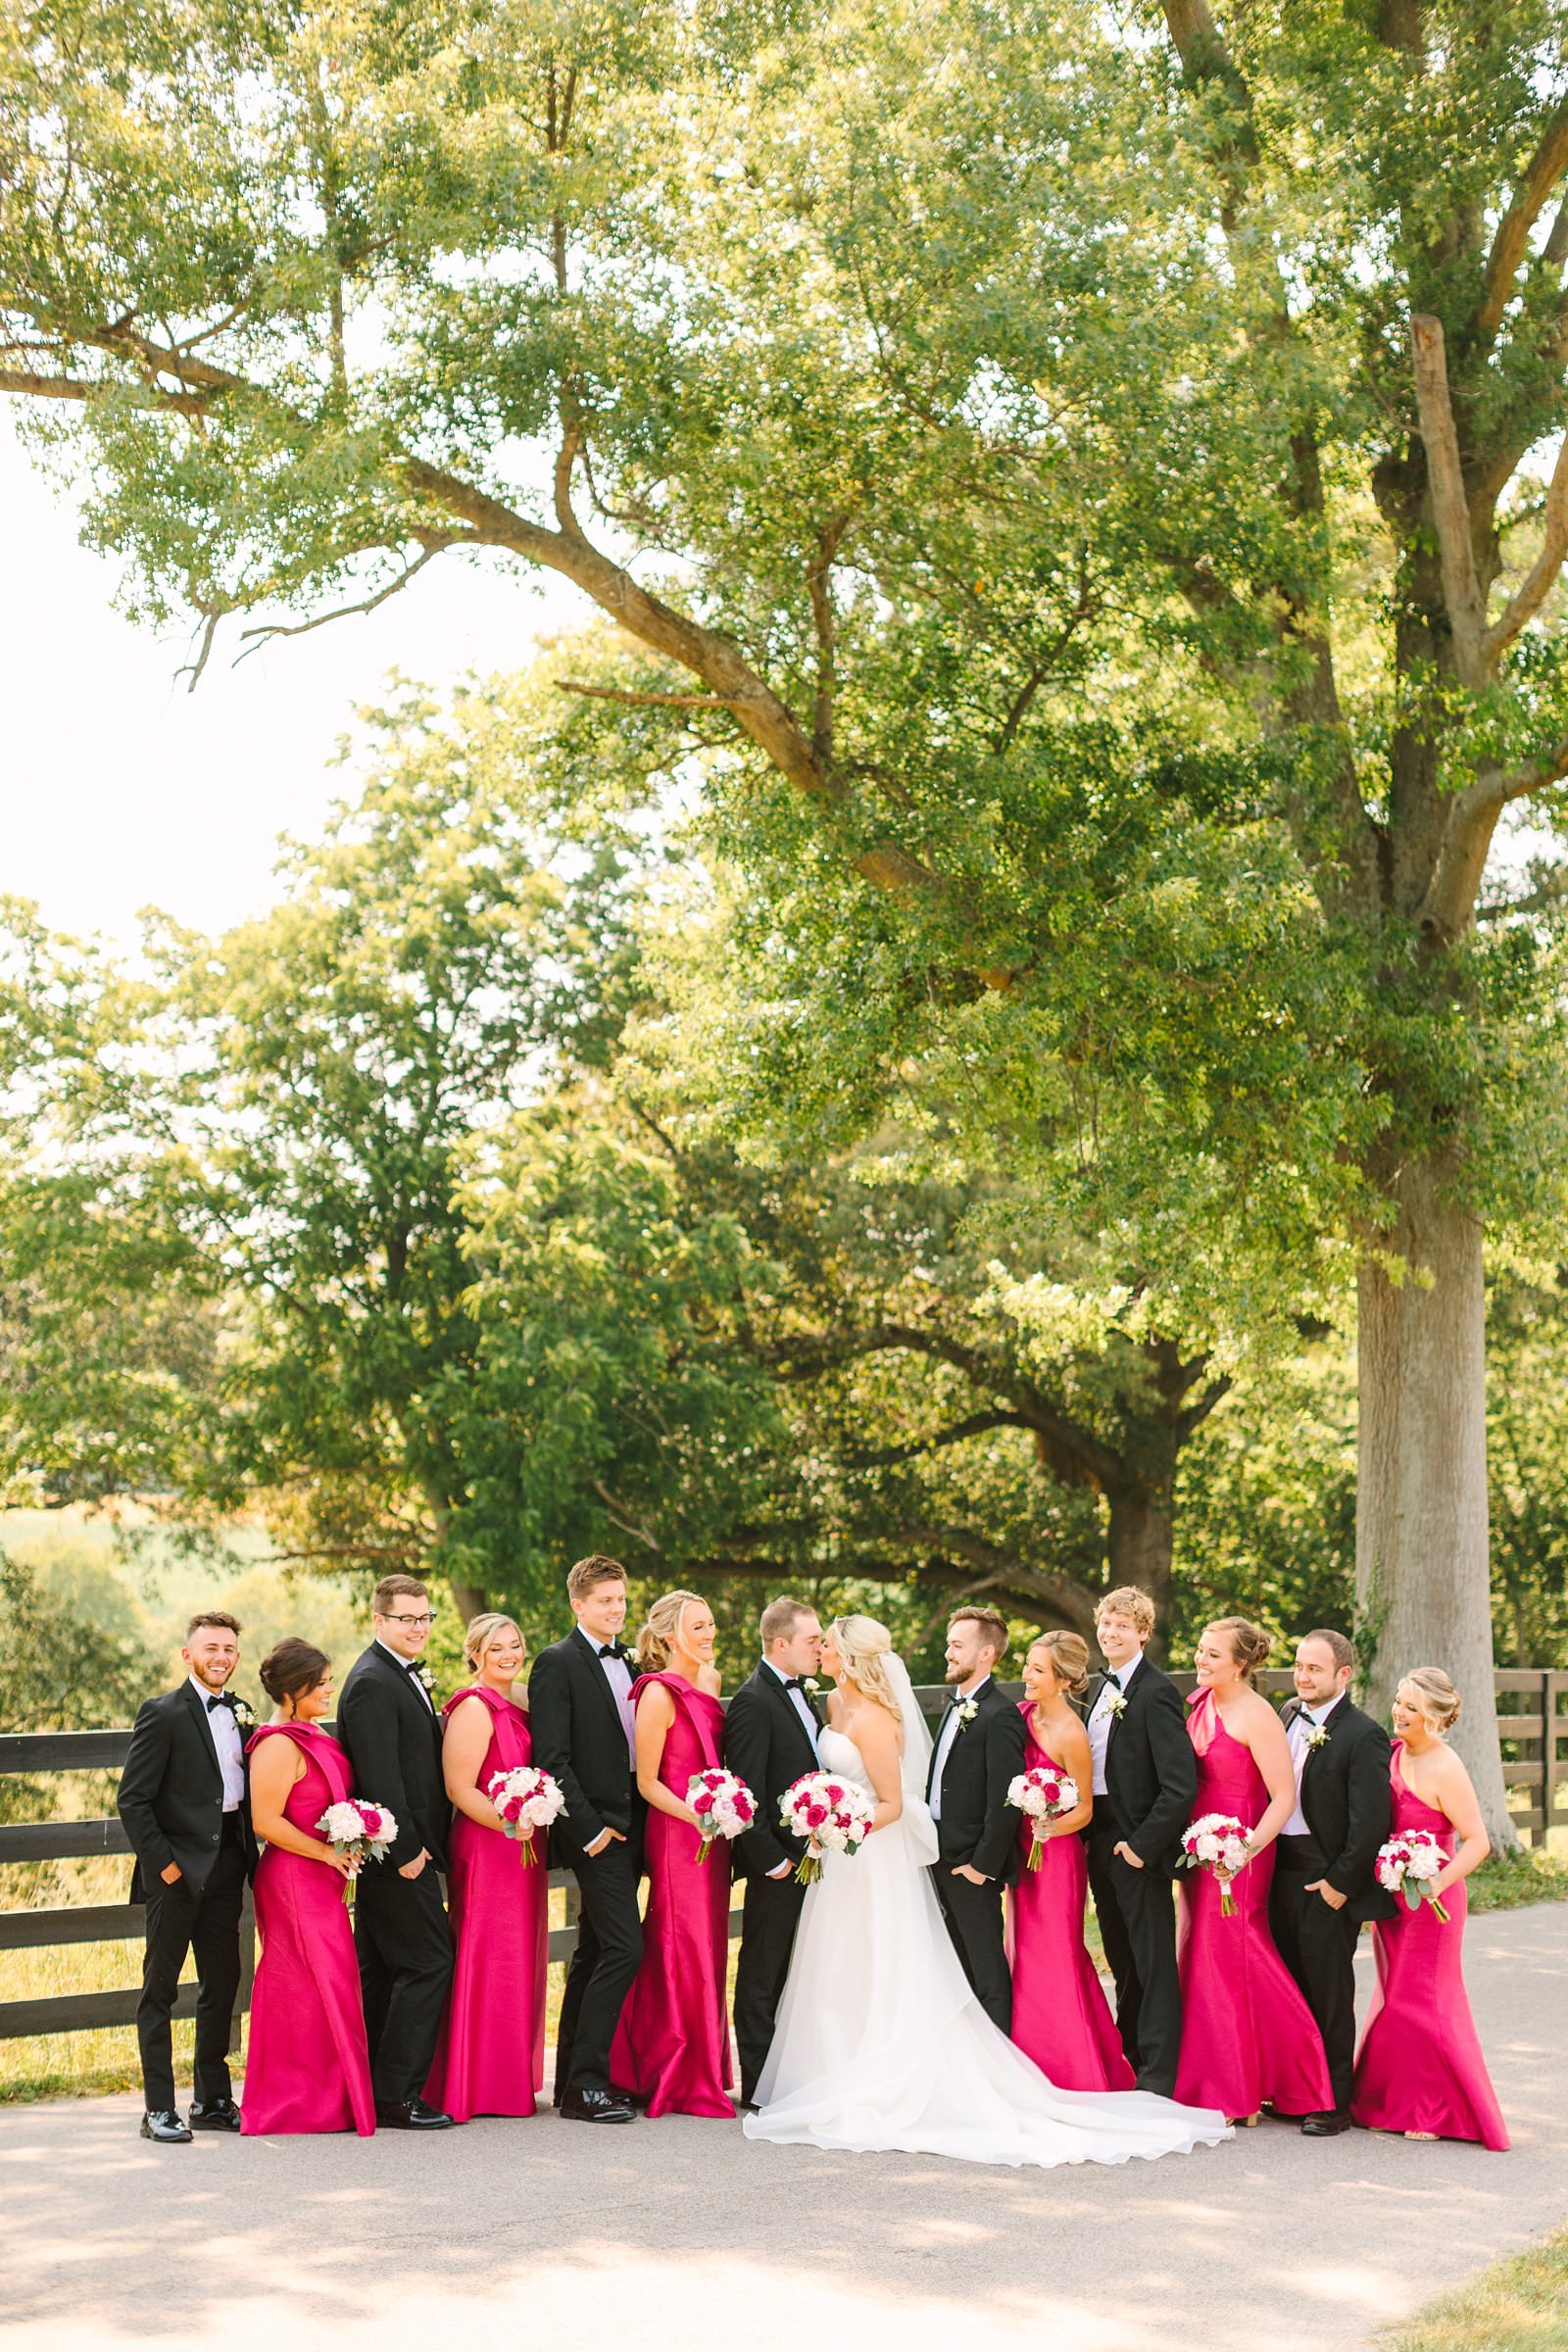 A Downtown Owensboro Wedding at River Park Center | Kaitlin & Justin074.jpg